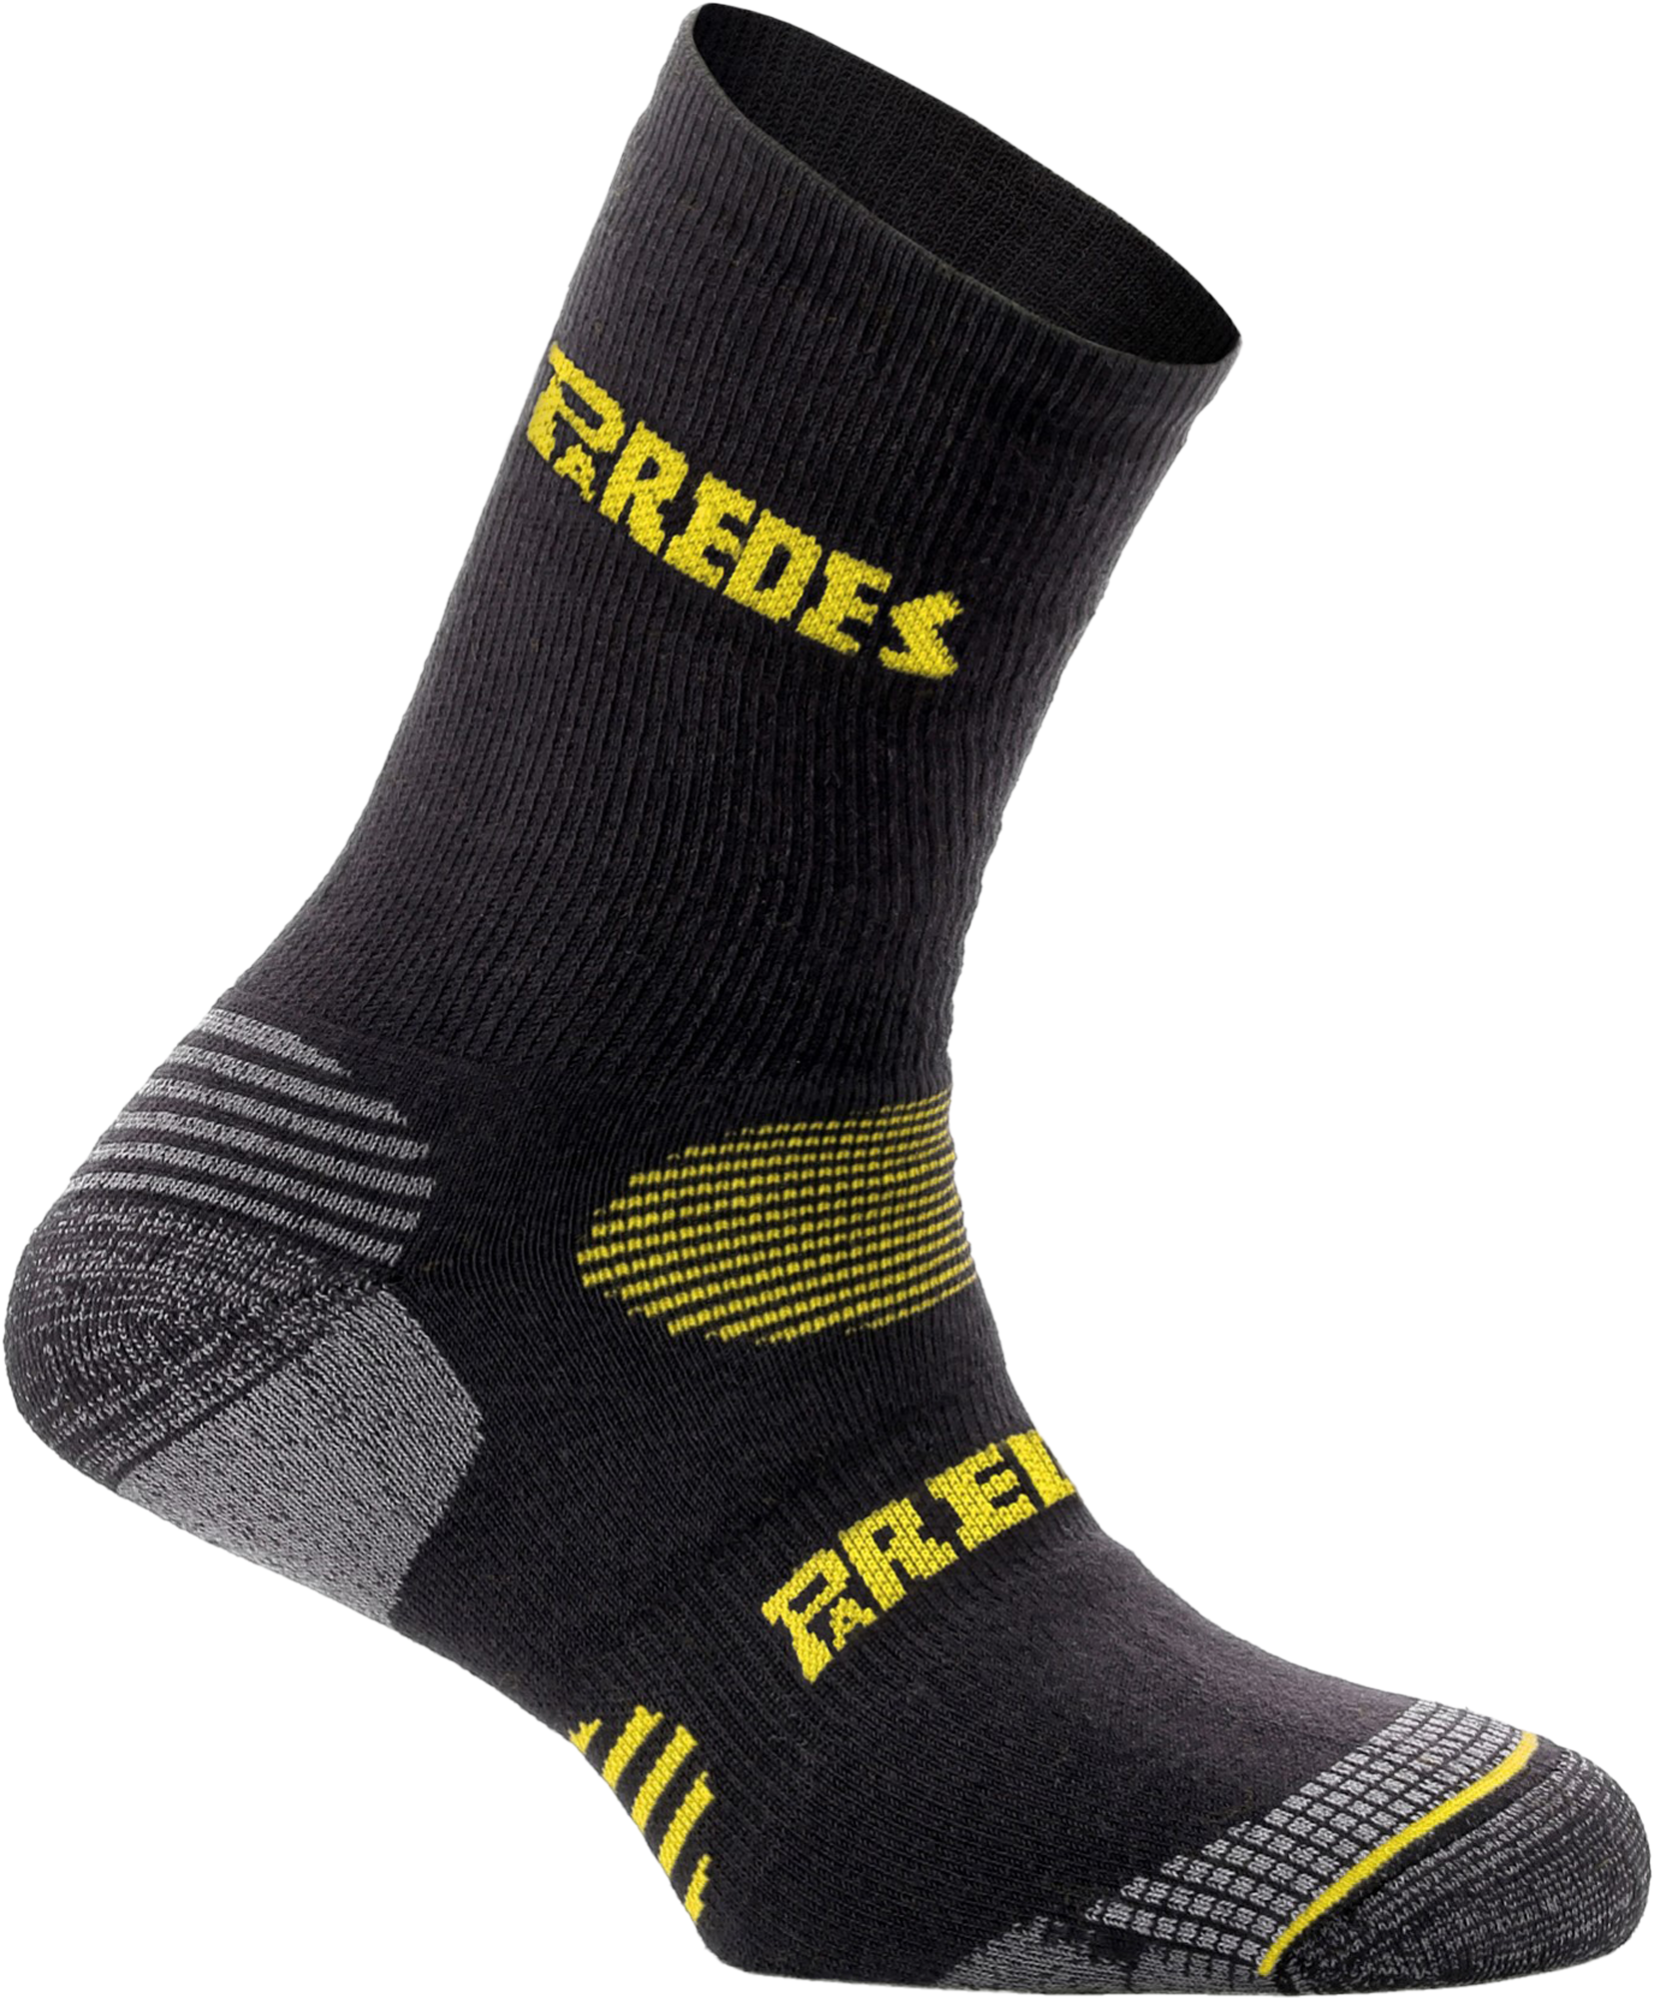 Pack de 3 calcetines largos negro amarillo-talla única